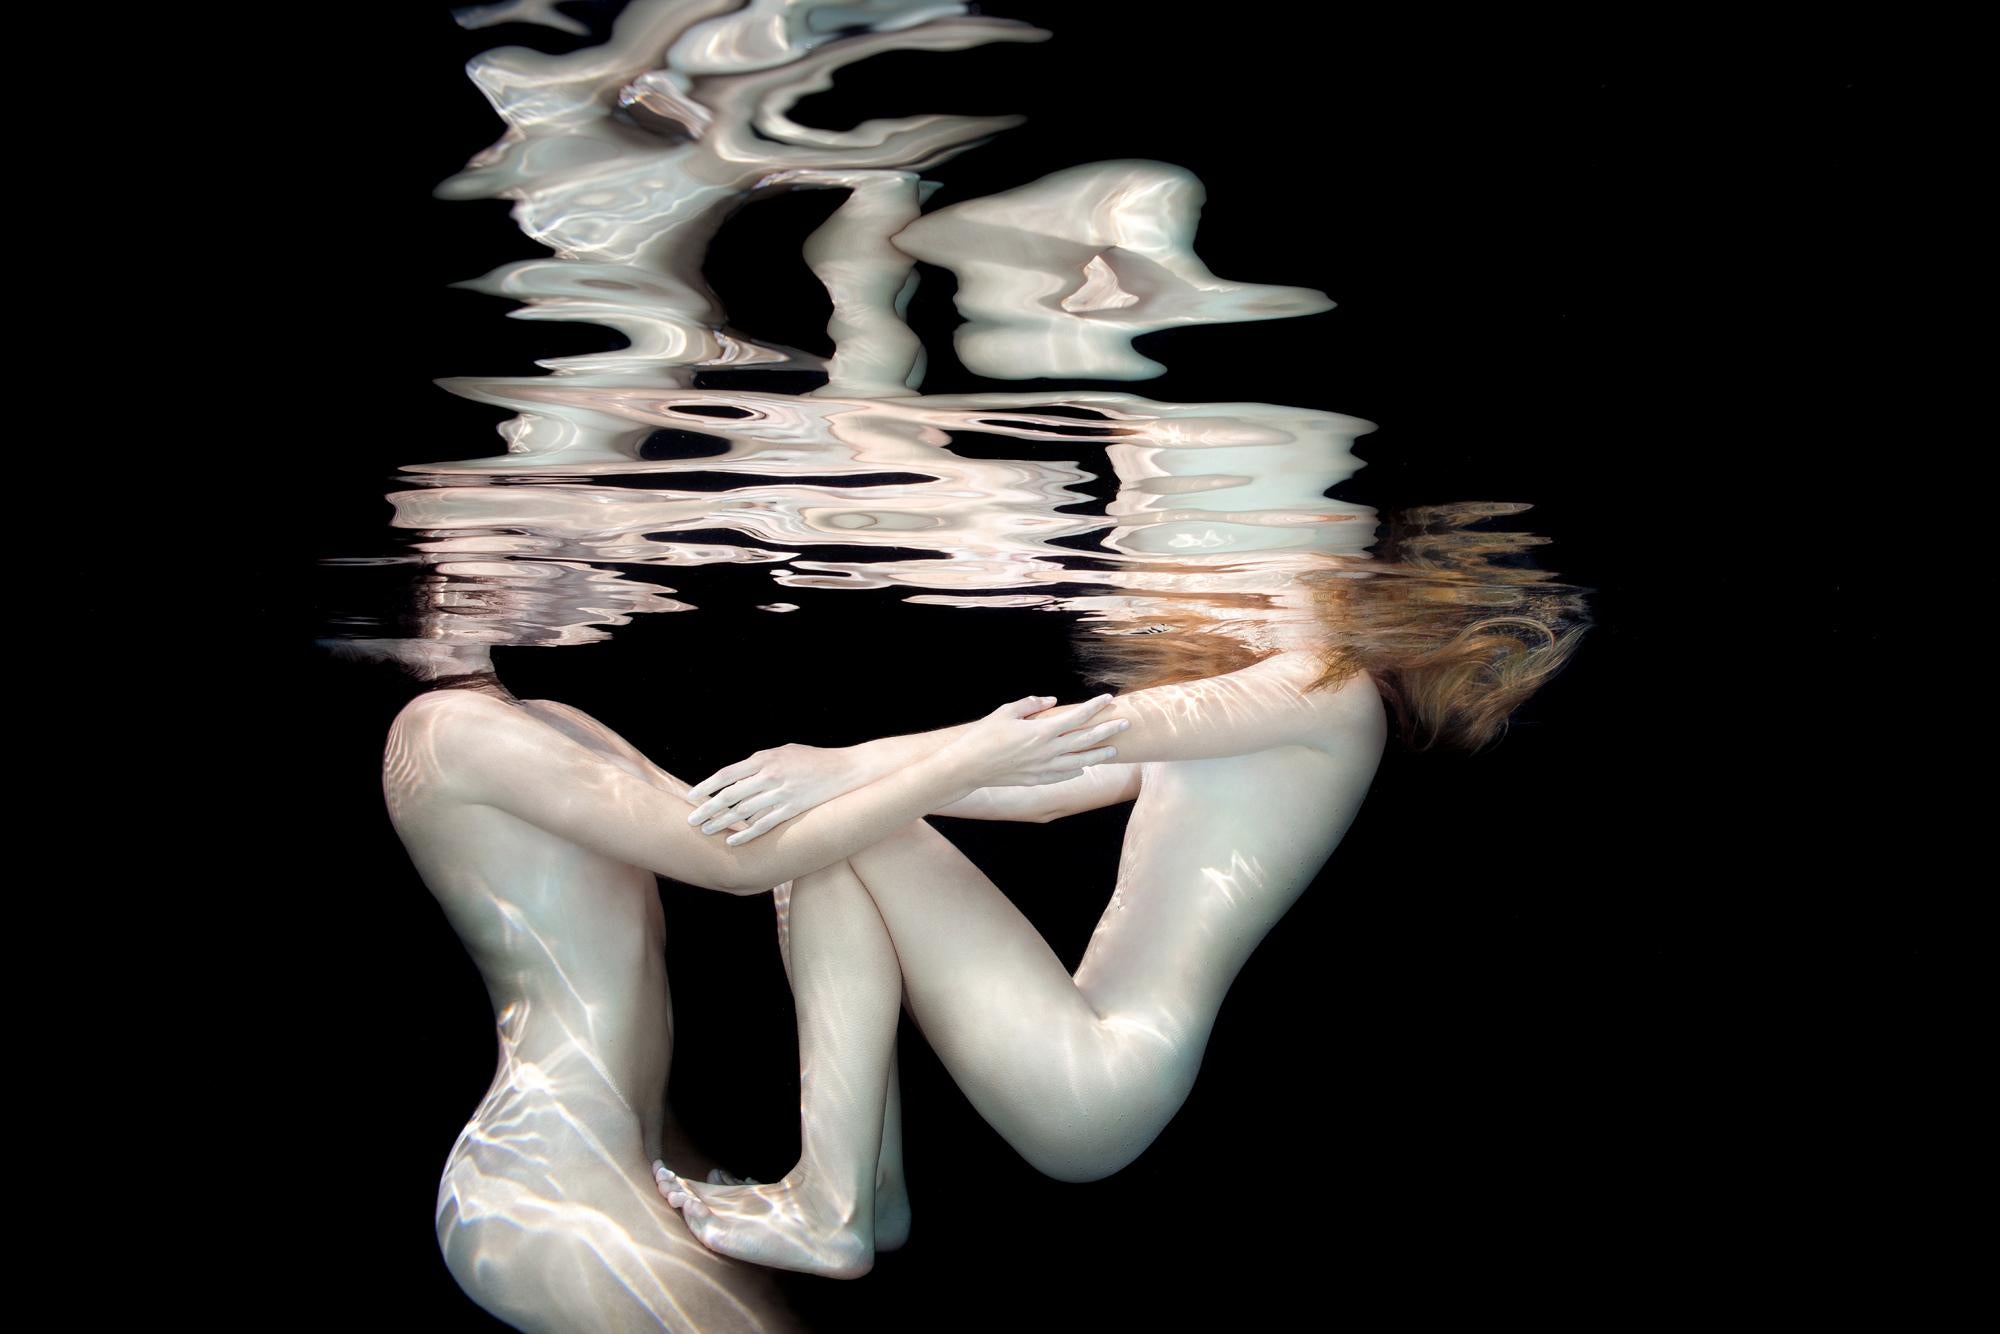 Alex Sher Figurative Photograph - Porcelain  - underwater nude photograph - archival pigment print 43" x 64"